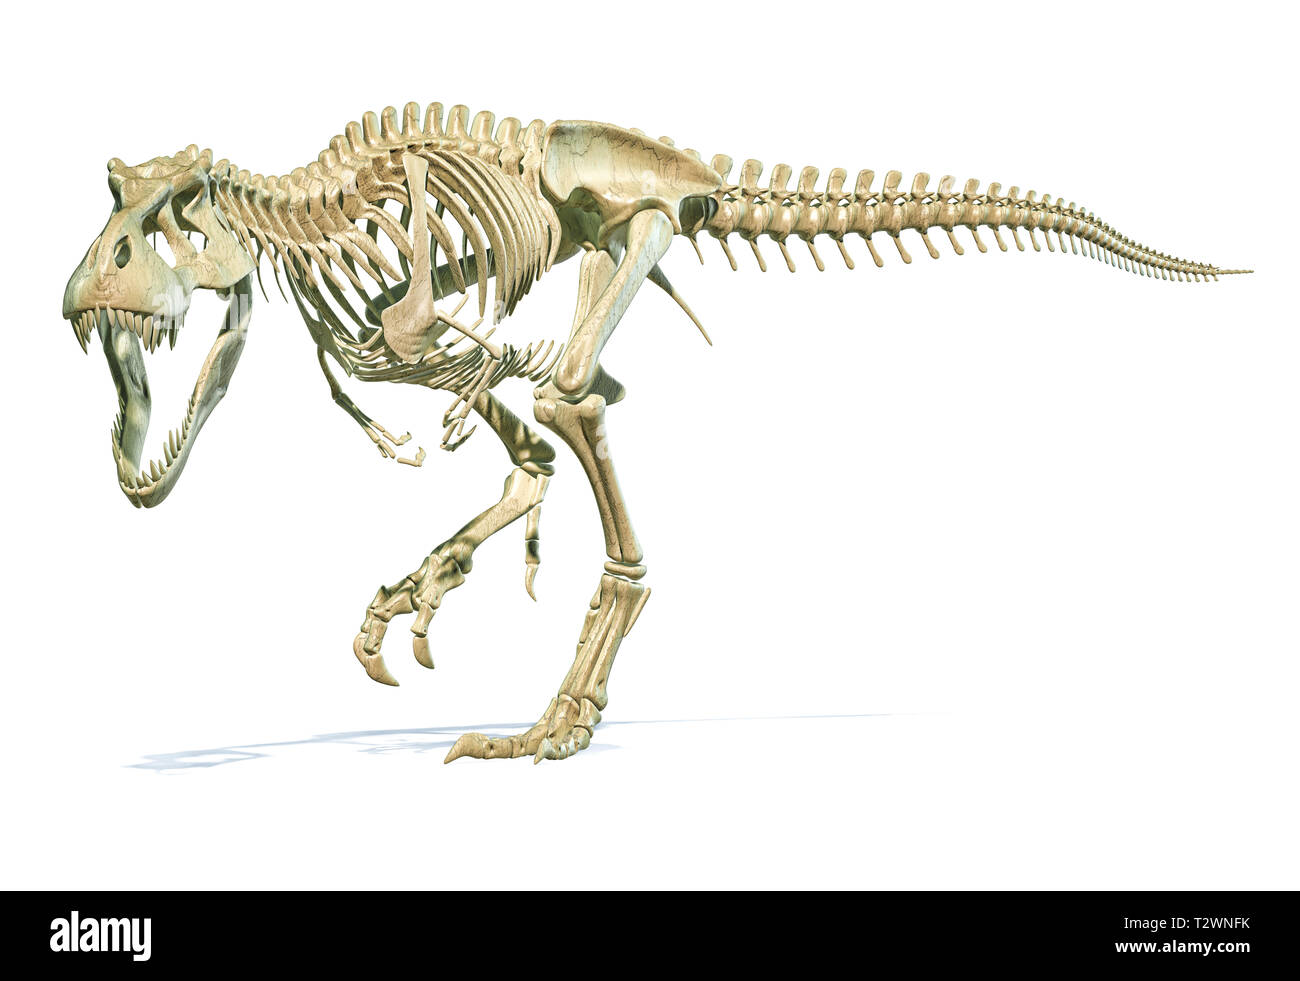 Tyrannosaurus Rex dinosaur photorealistic 3d rendering of full skeleton on white background. Stock Photo